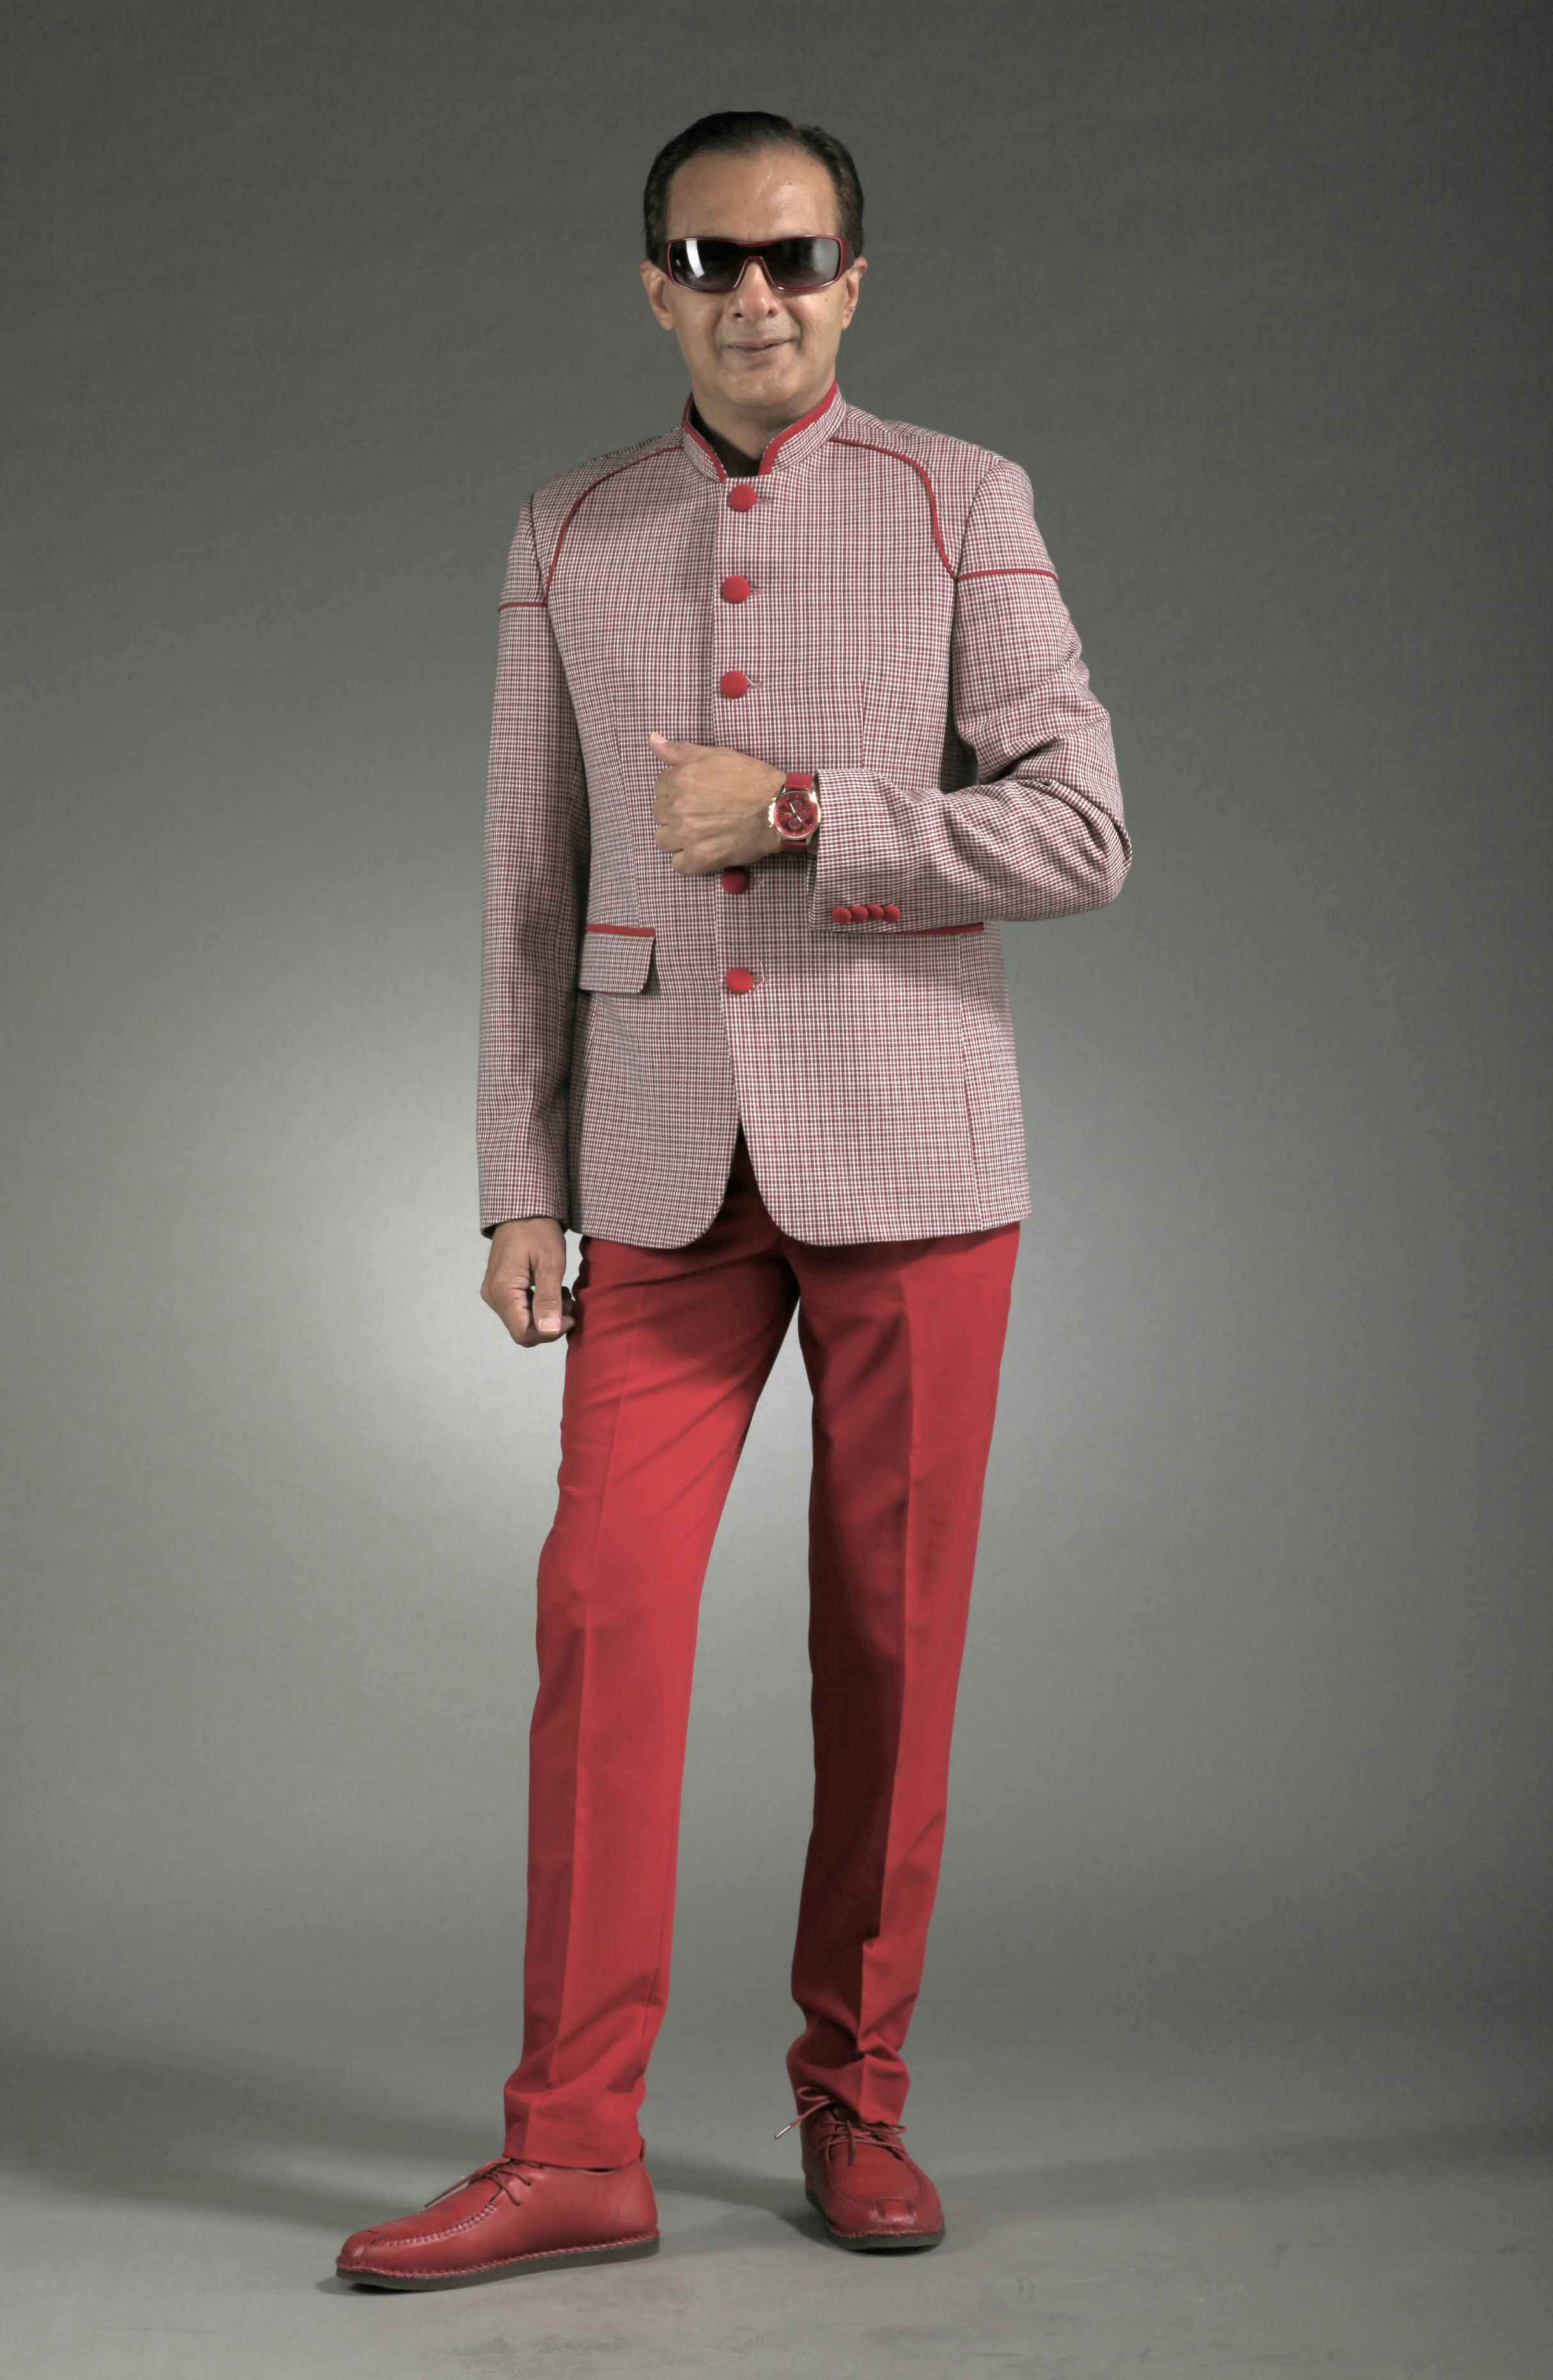 Suit Rental Suits Rent Hire Designer My Singapore Tailor Tailors Rentals Shop Tuxedo Black Tie Wedding Formal 16